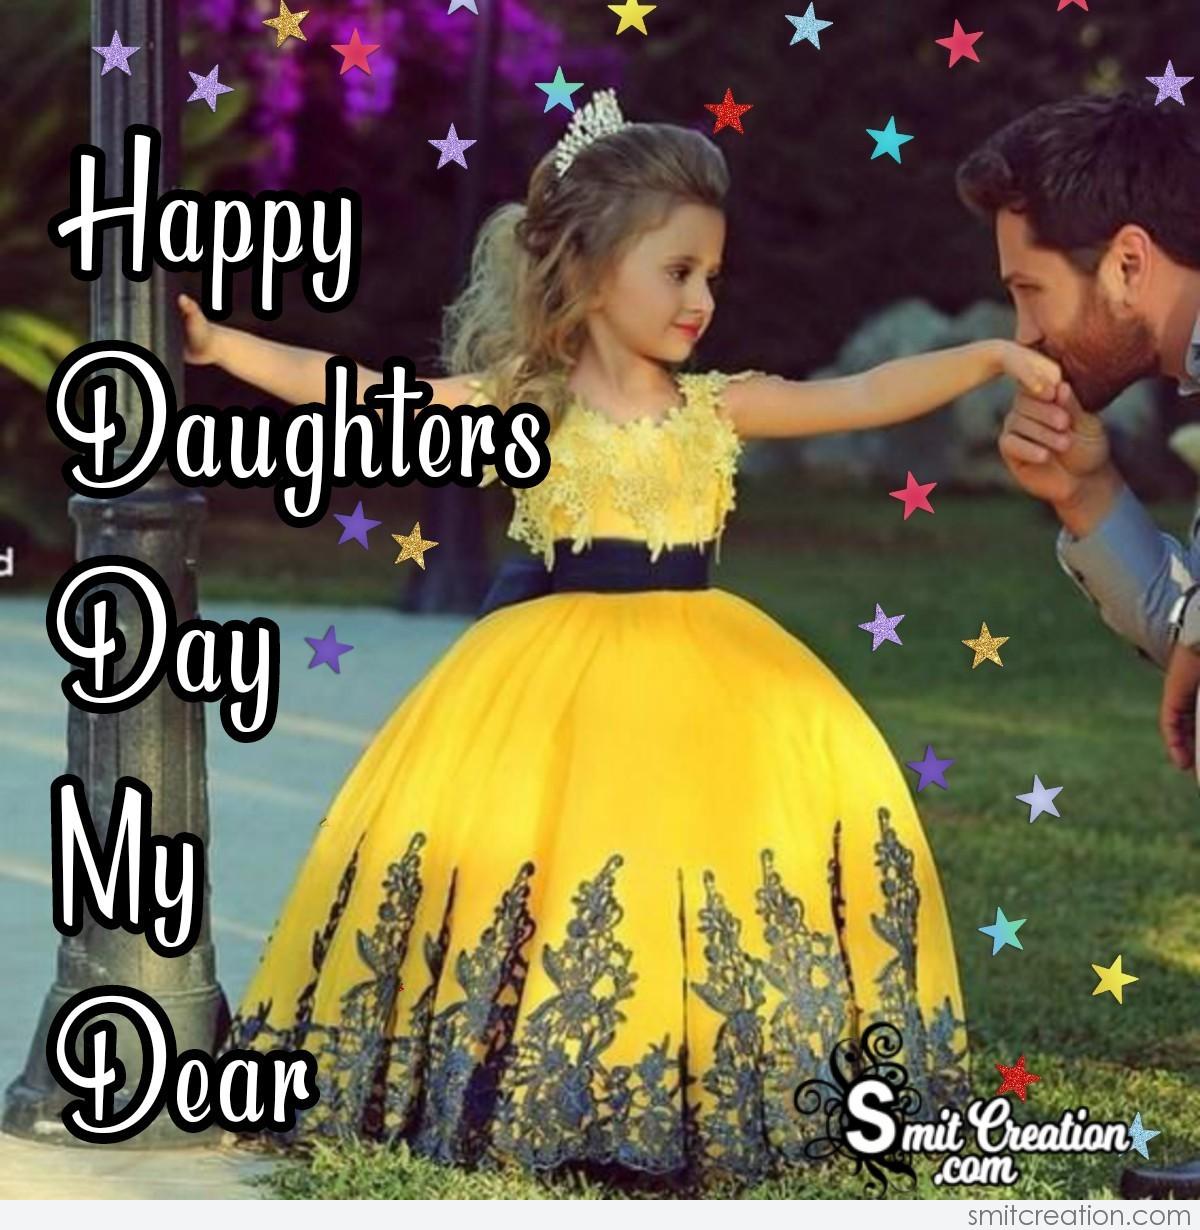 Happy Daughters Day My Dear - SmitCreation.com